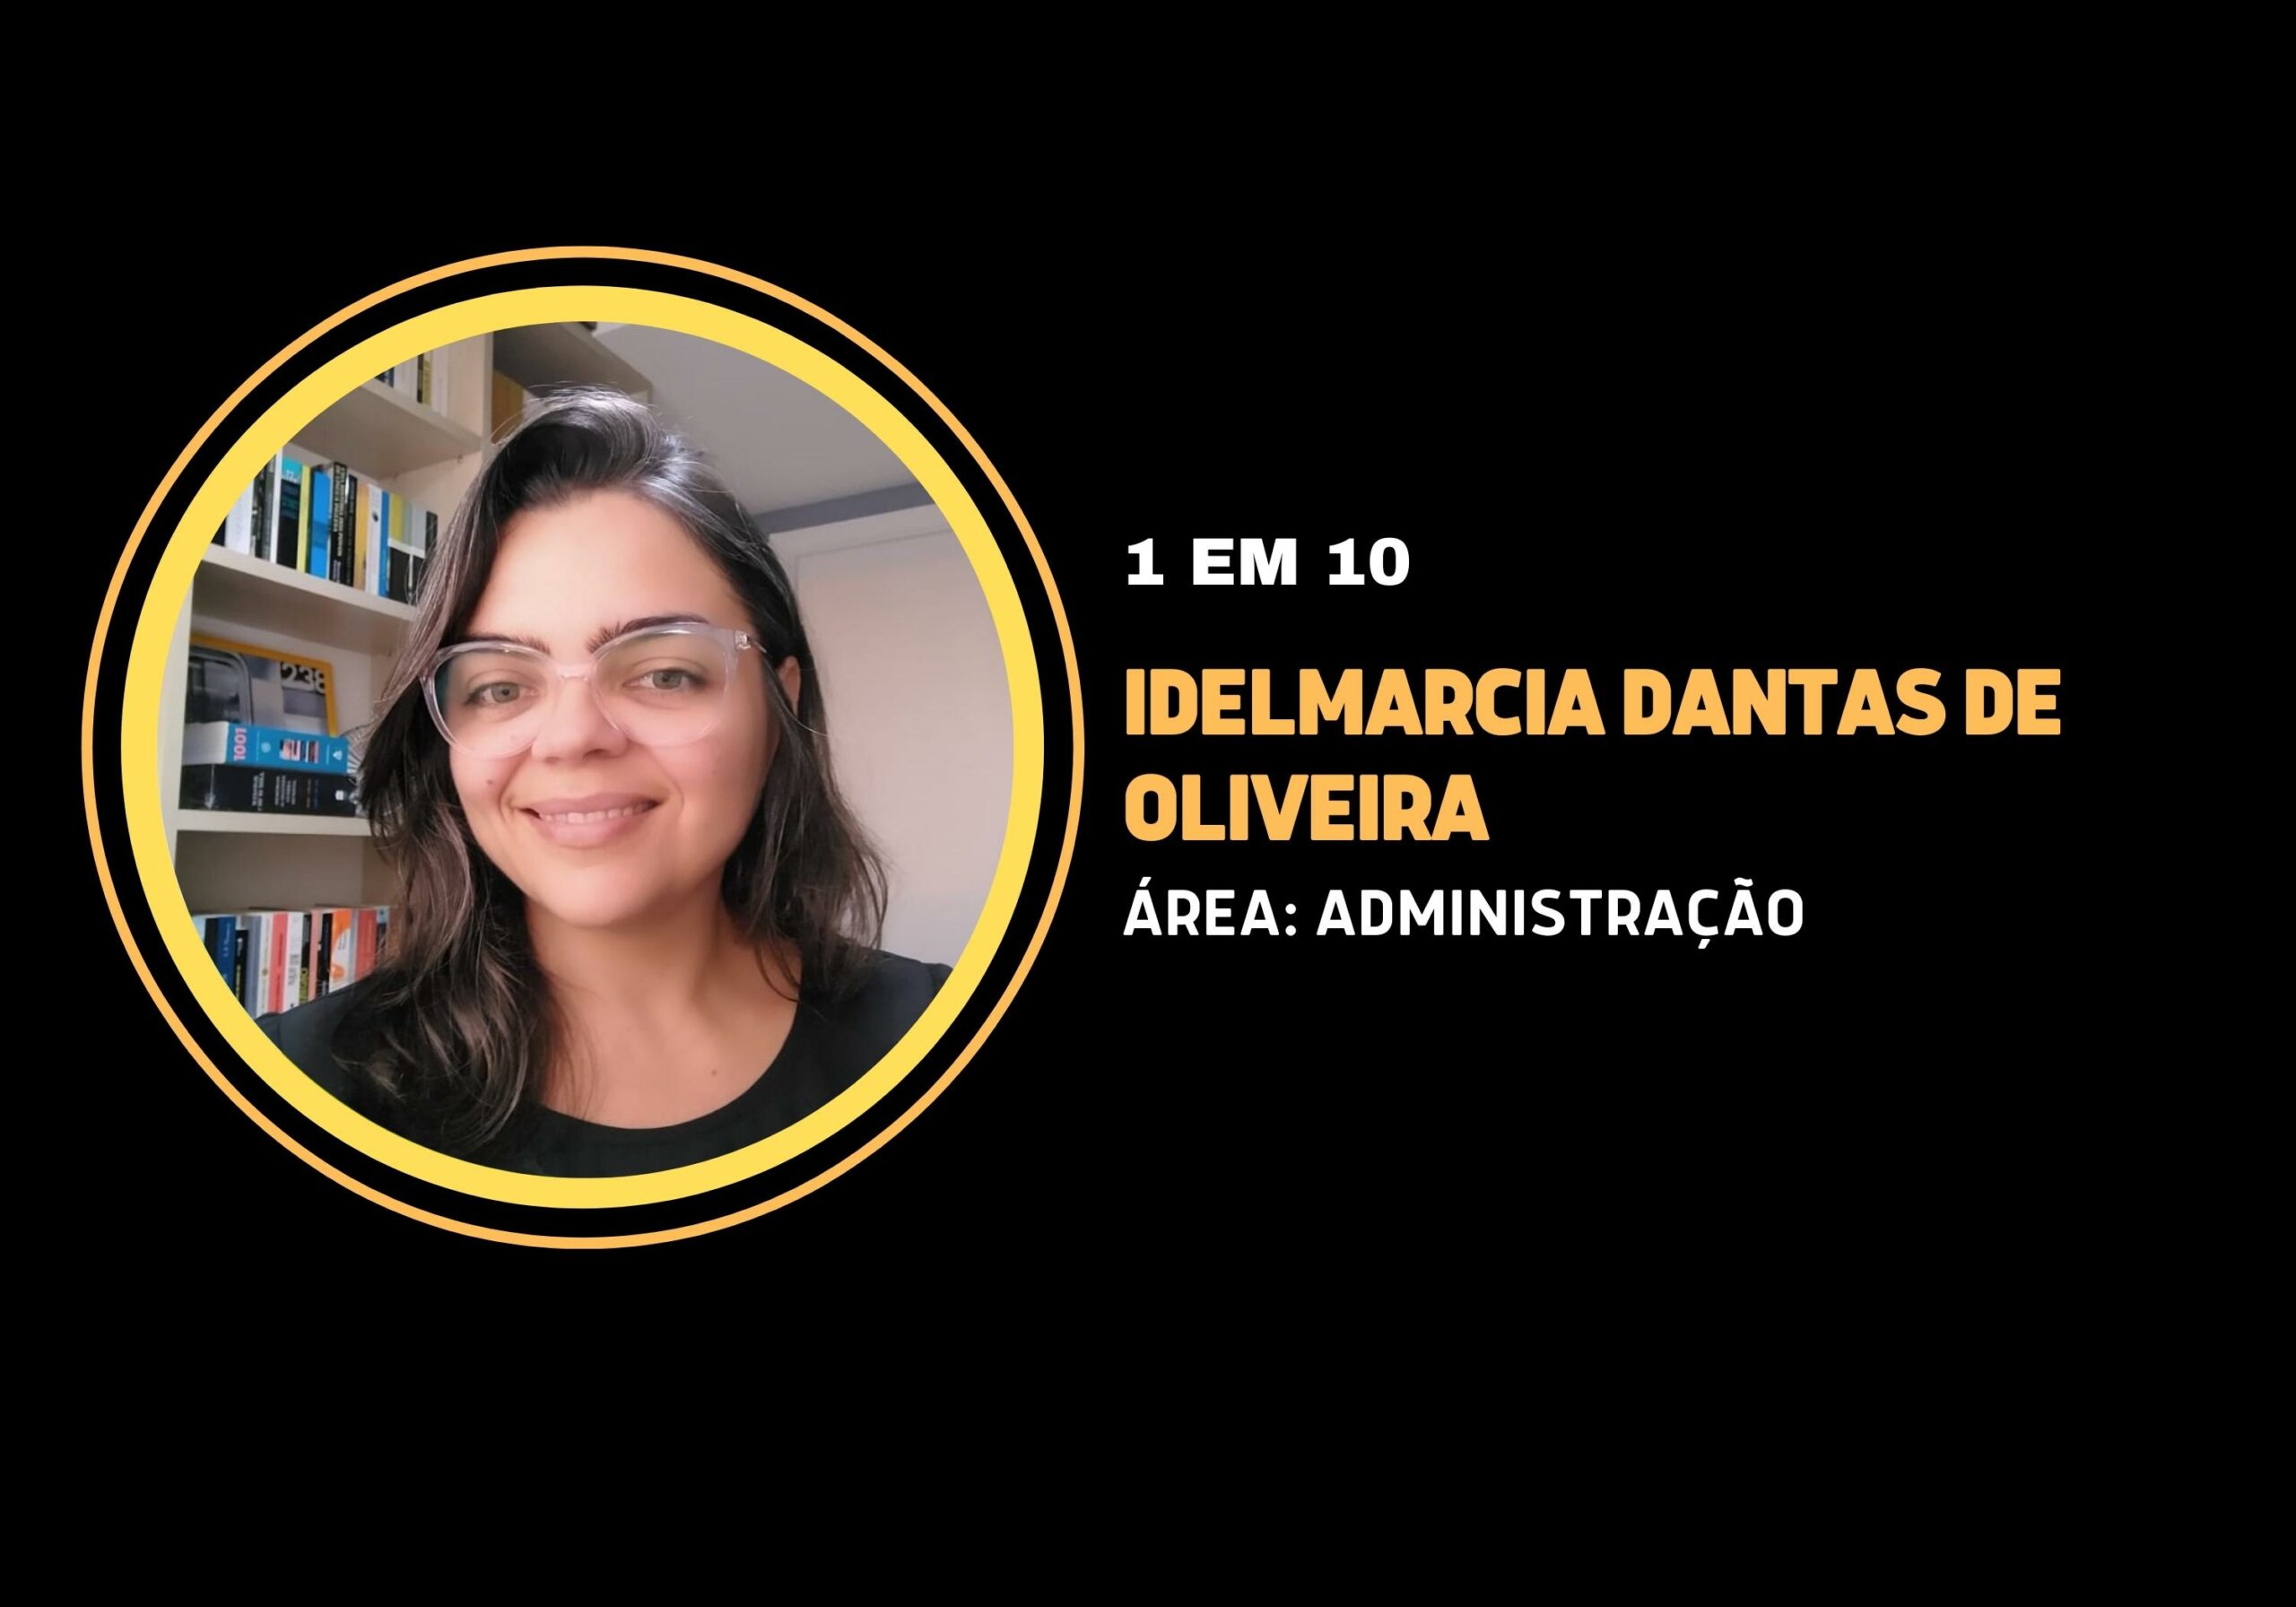 Idelmarcia Dantas de Oliveira | 1 em 10